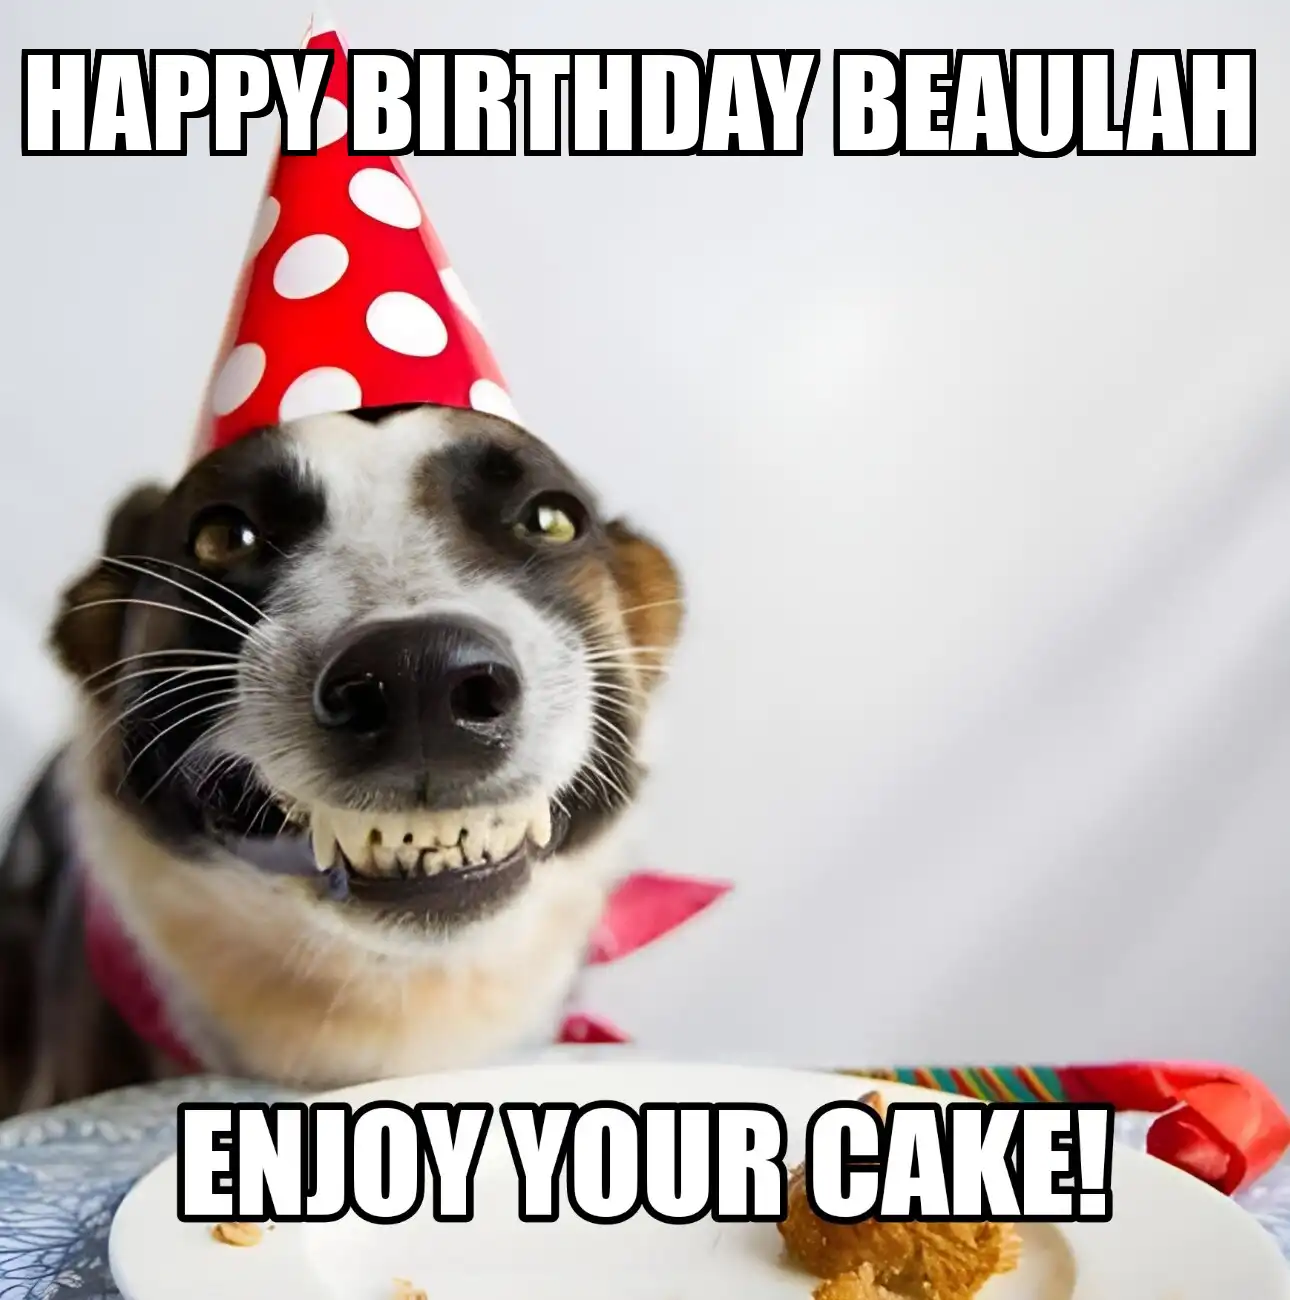 Happy Birthday Beaulah Enjoy Your Cake Dog Meme